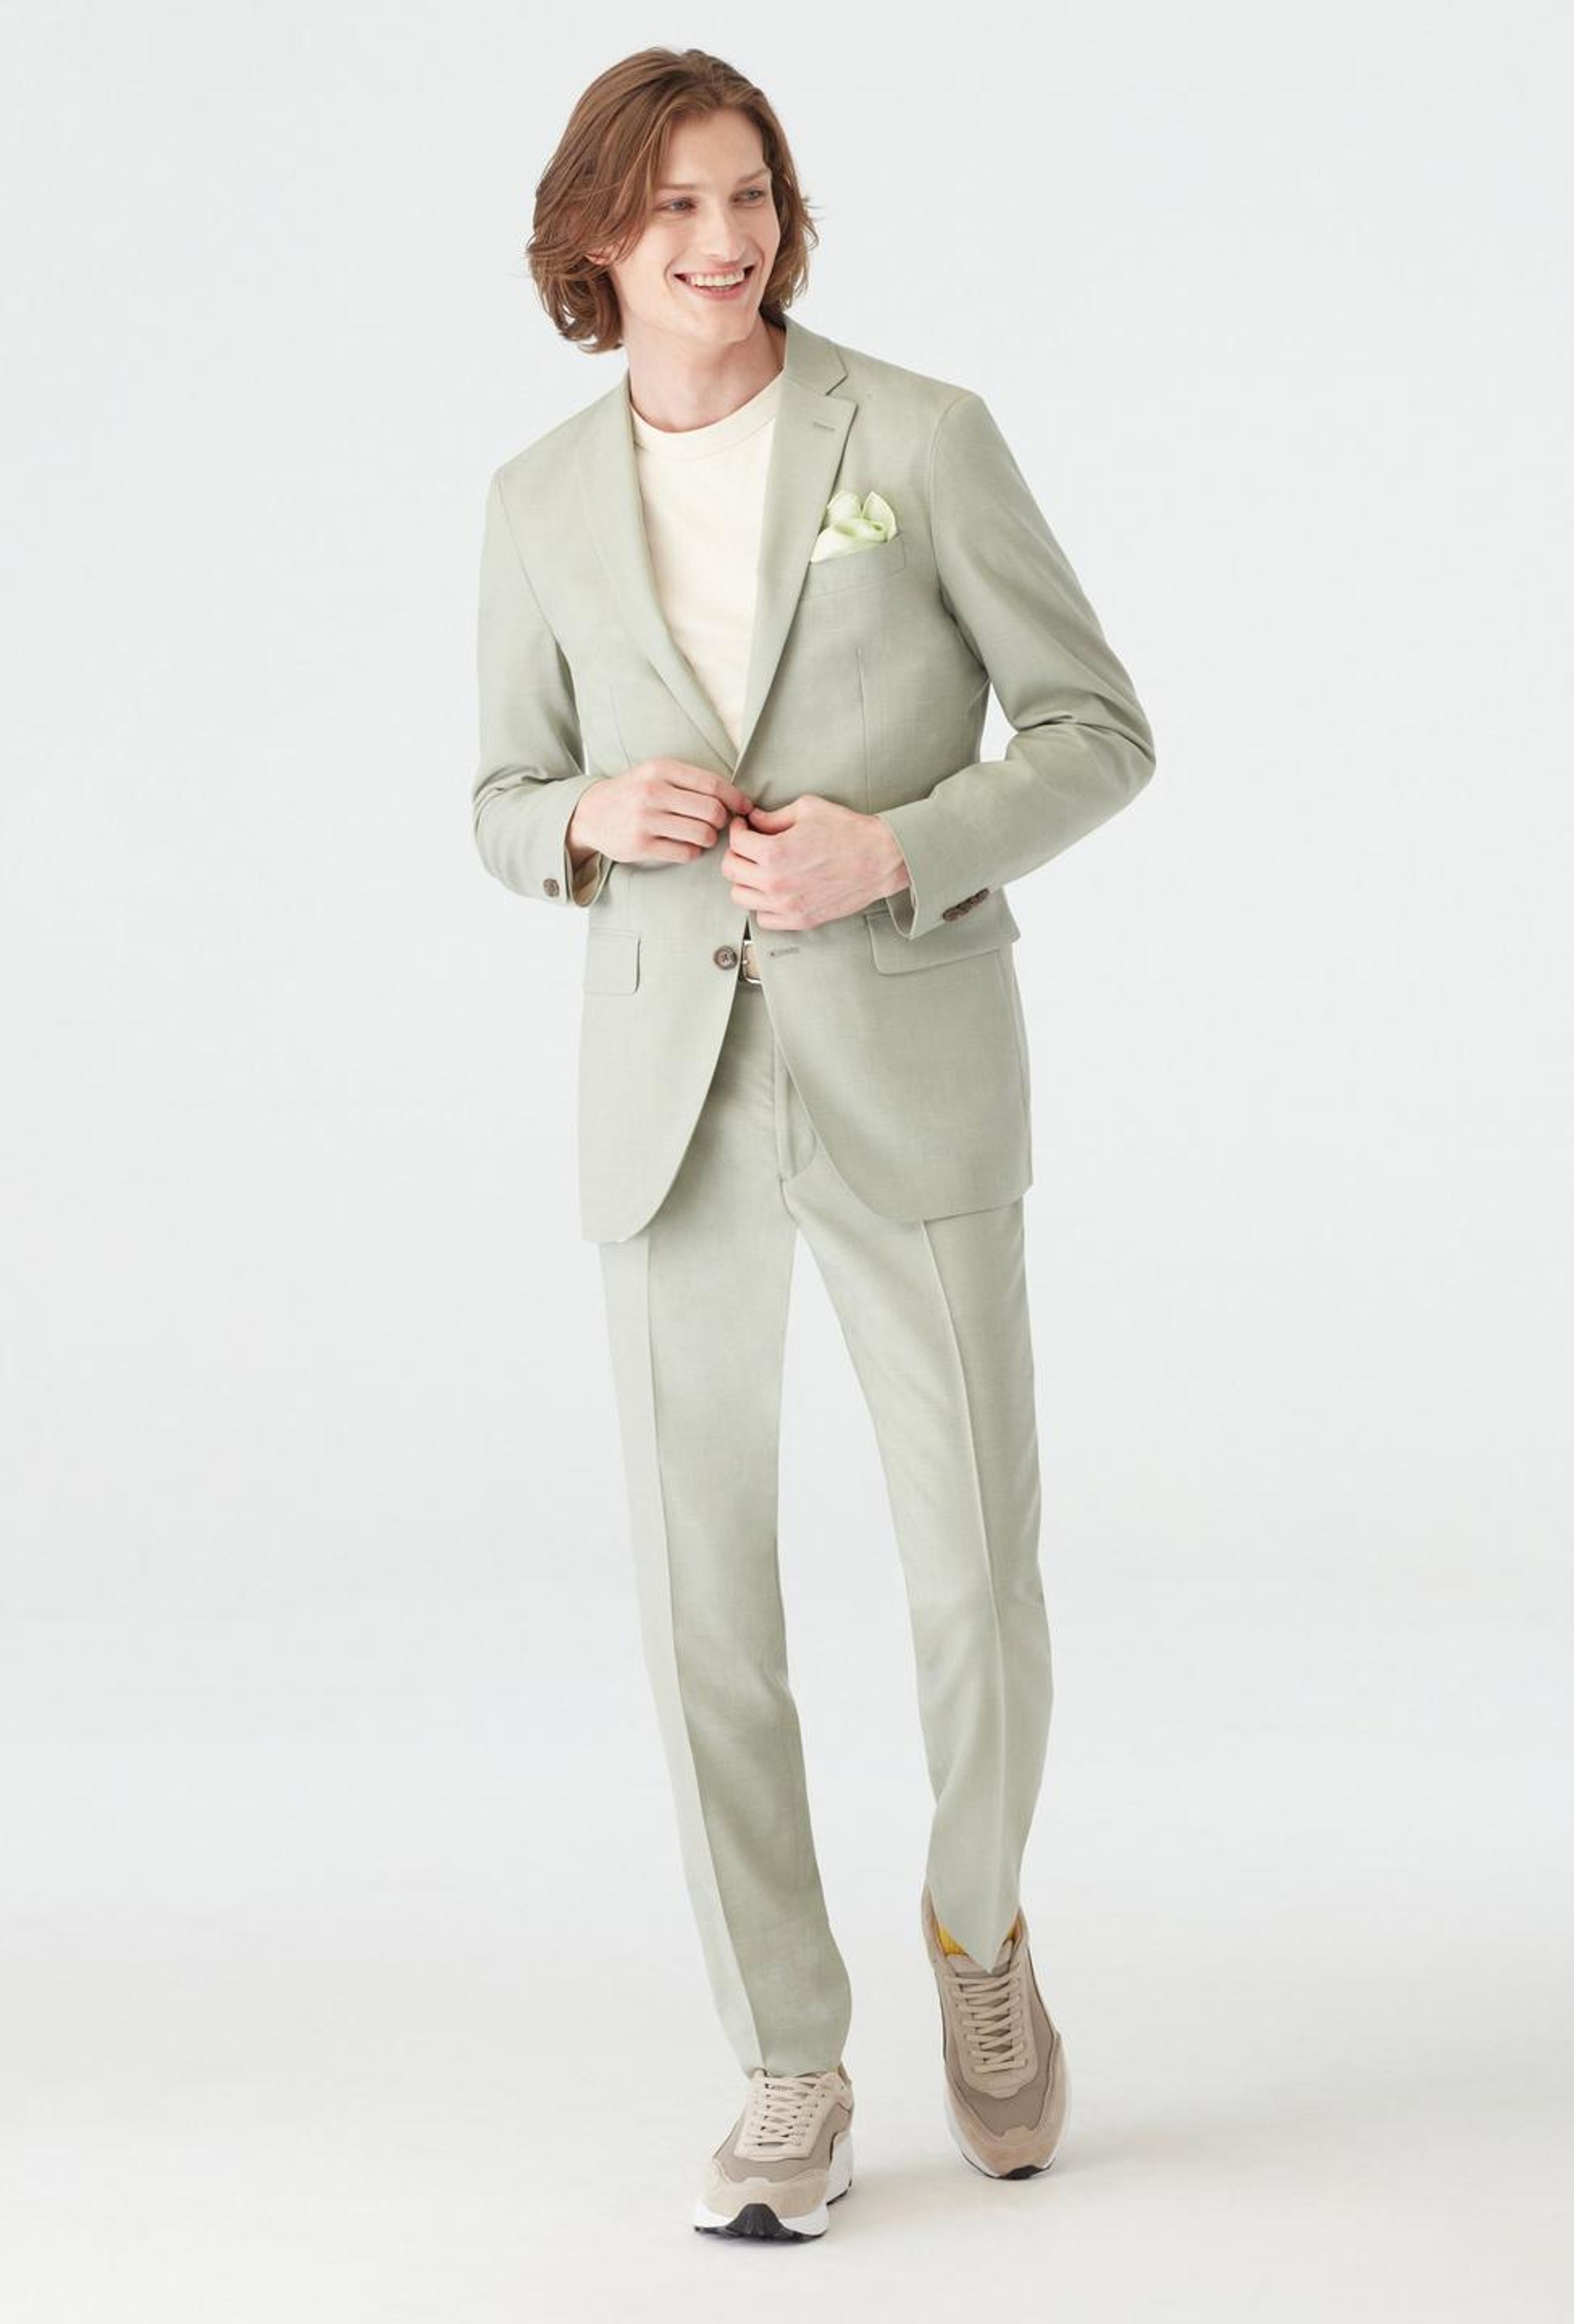 Stockport Wool Linen Light Sage Suit